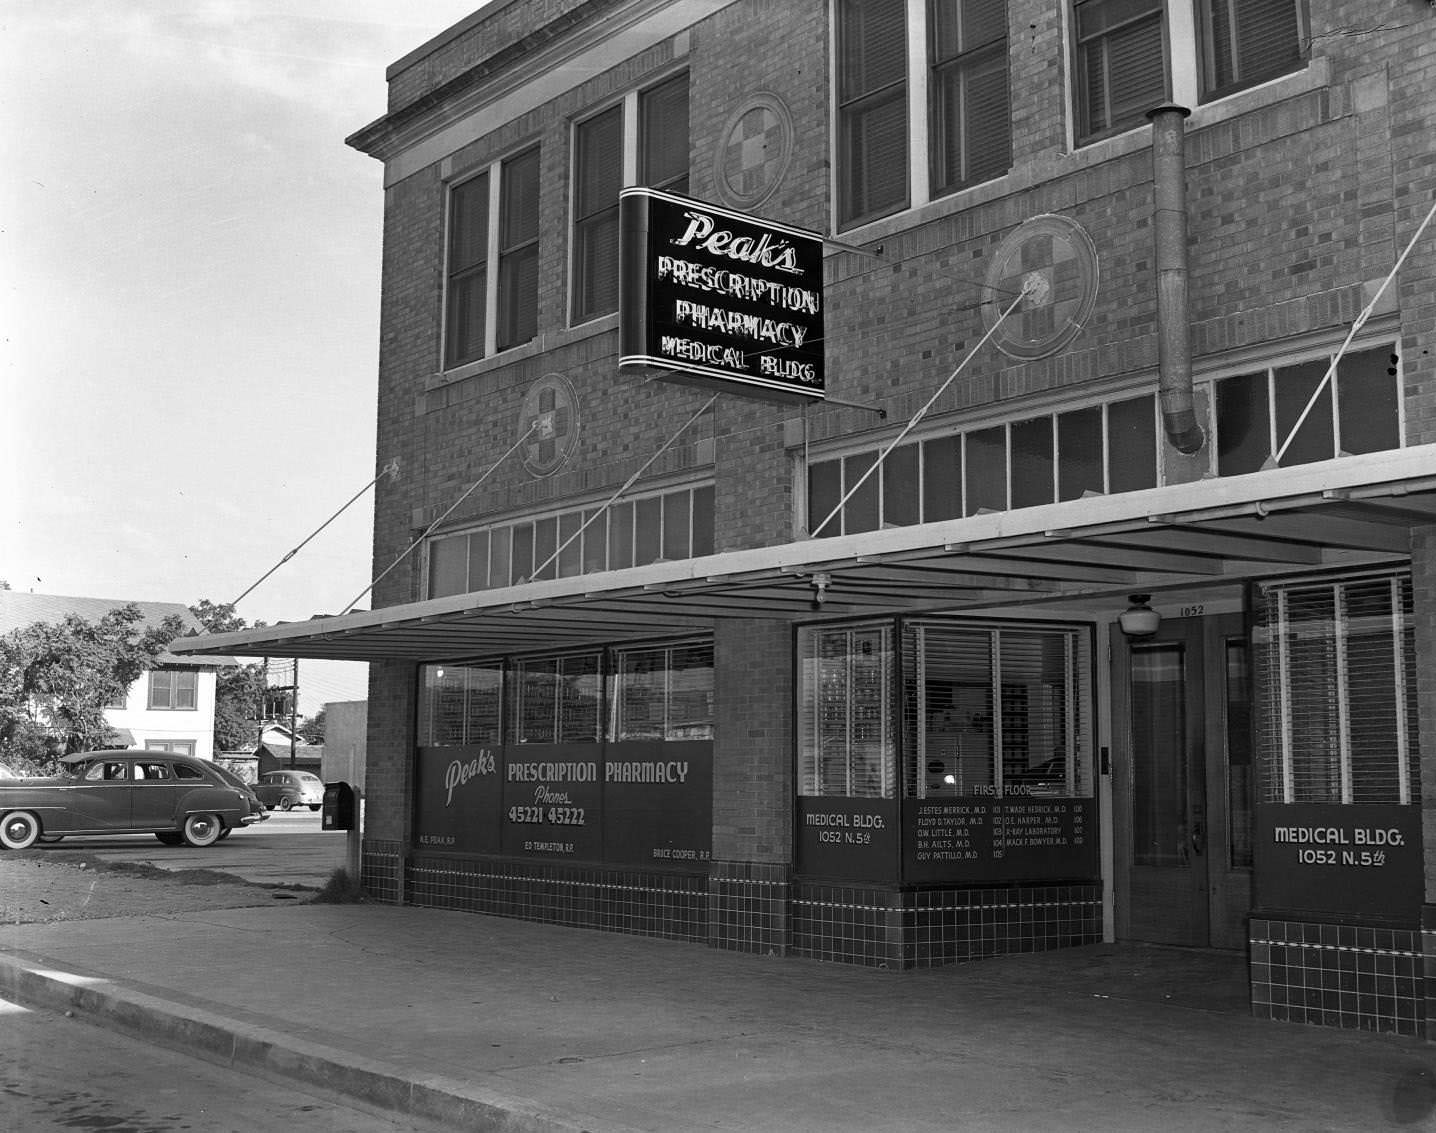 Peak's Pharmacy at 1052 N. 5th Street in Abilene, 1953